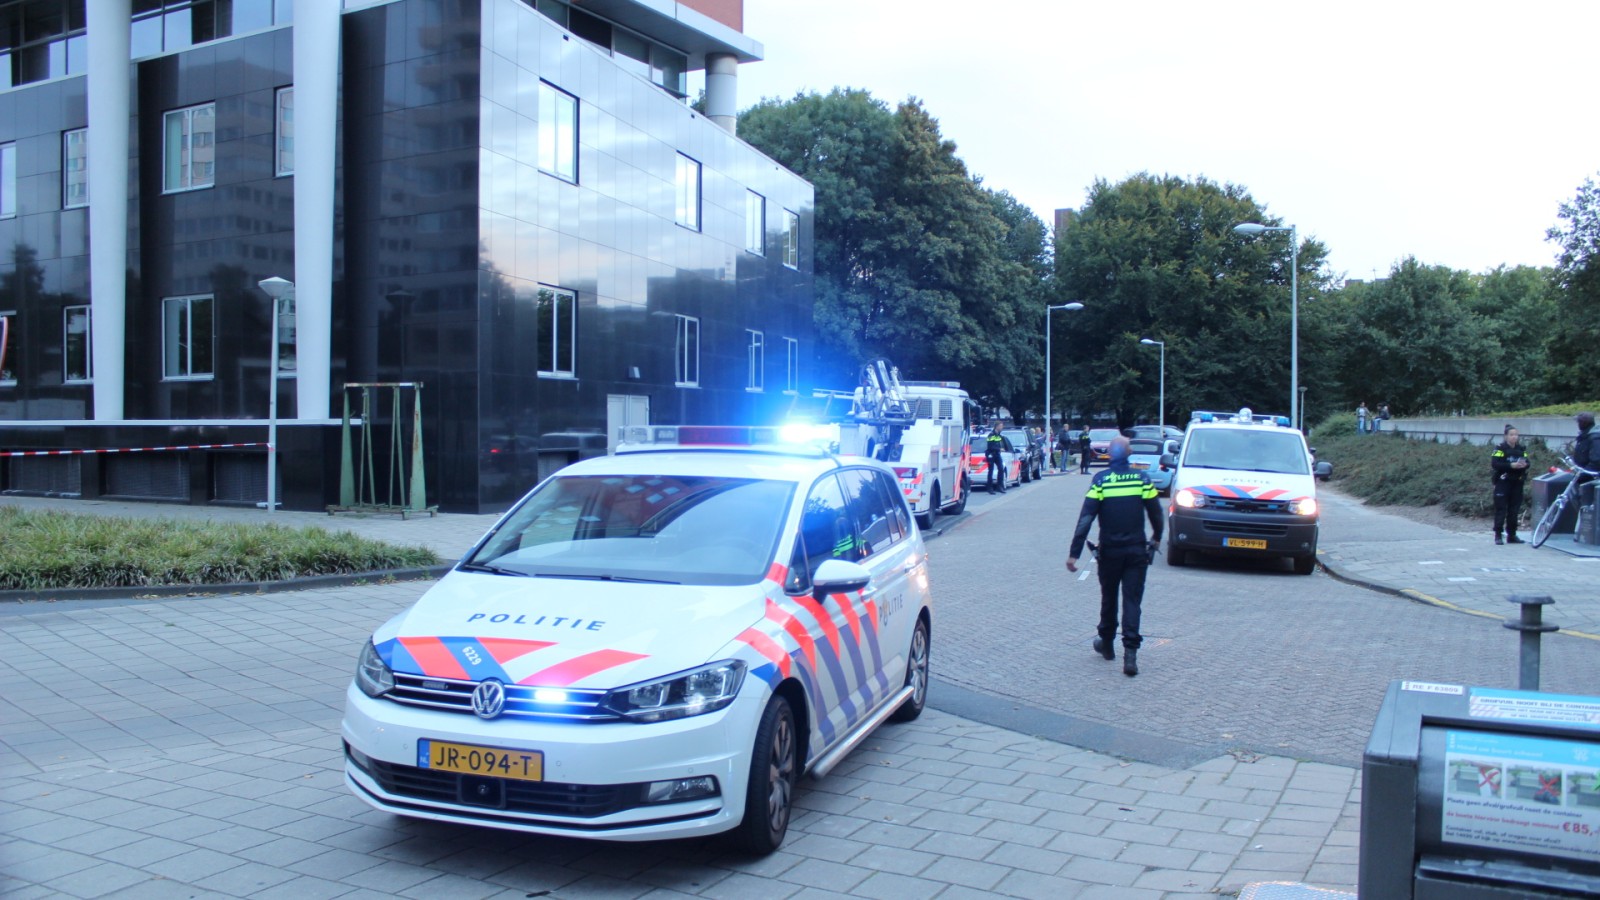 Slachtoffer schietpartij Nieuw-West overleden, zat naast vrouw en kind in auto  Koningin Wilhelminaplein parkeergarage